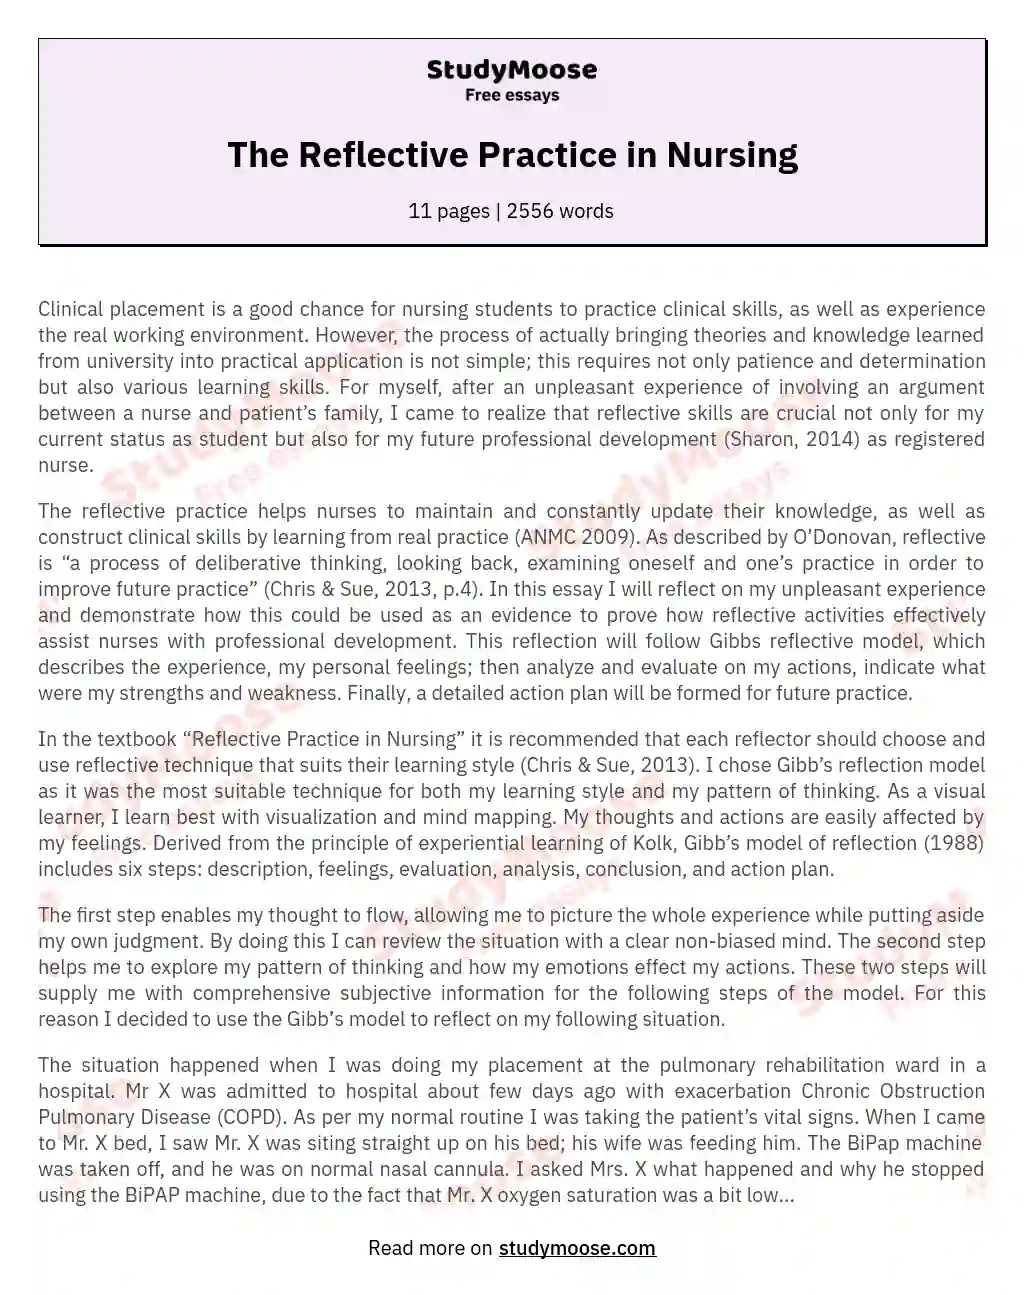 The Reflective Practice in Nursing essay